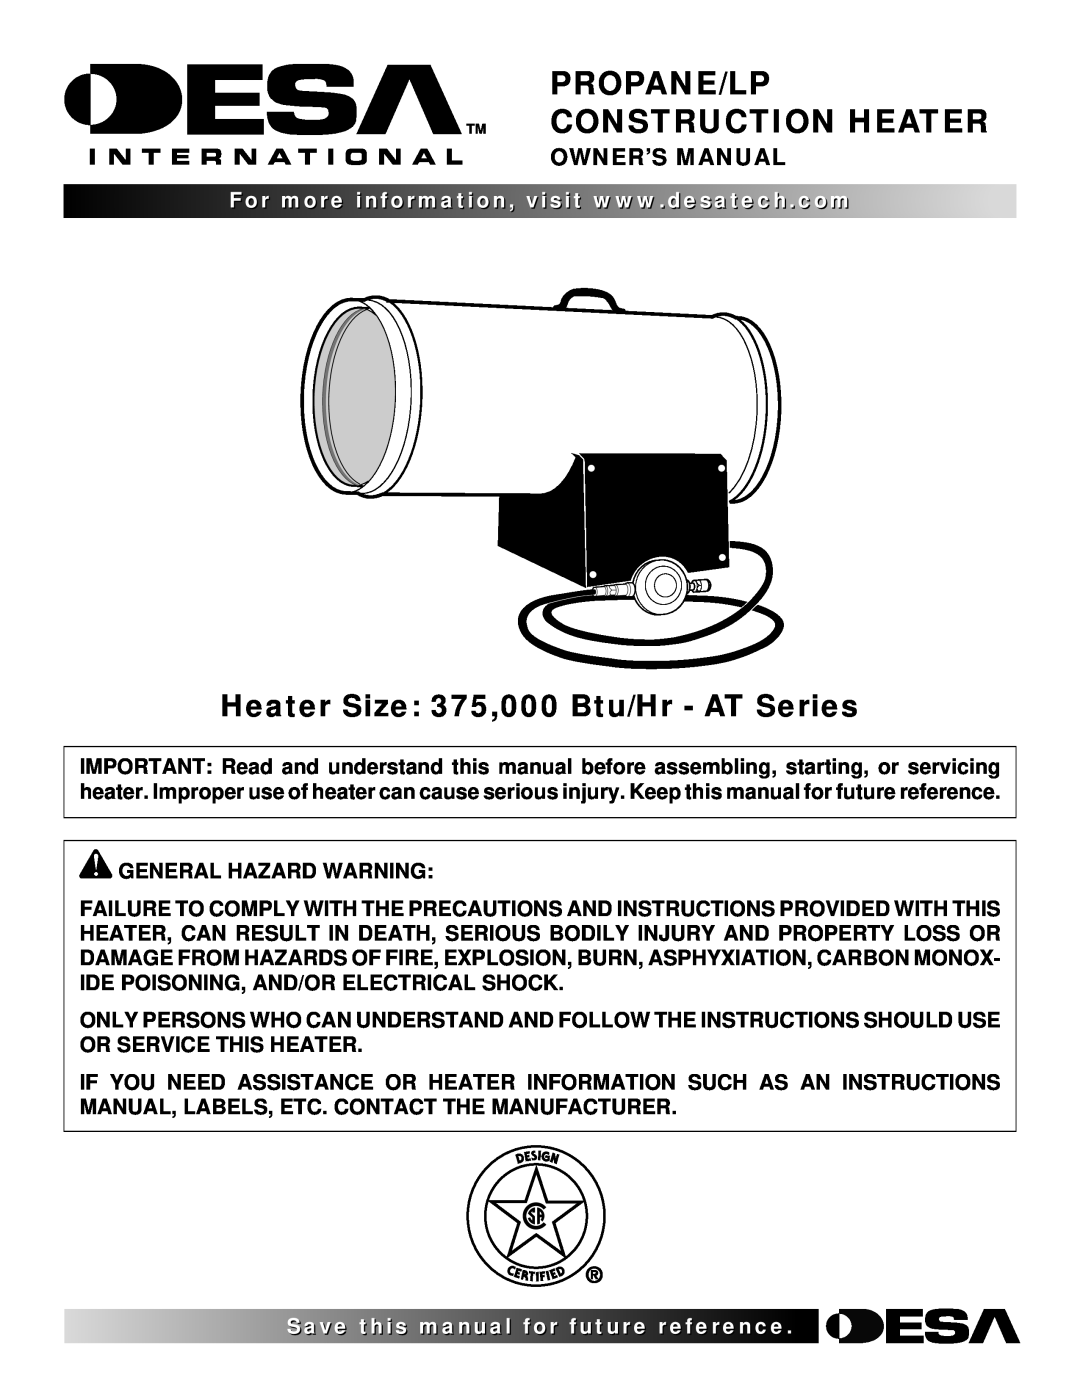 Desa owner manual Propane/Lp Construction Heater, Heater Size 375,000 Btu/Hr - AT Series 